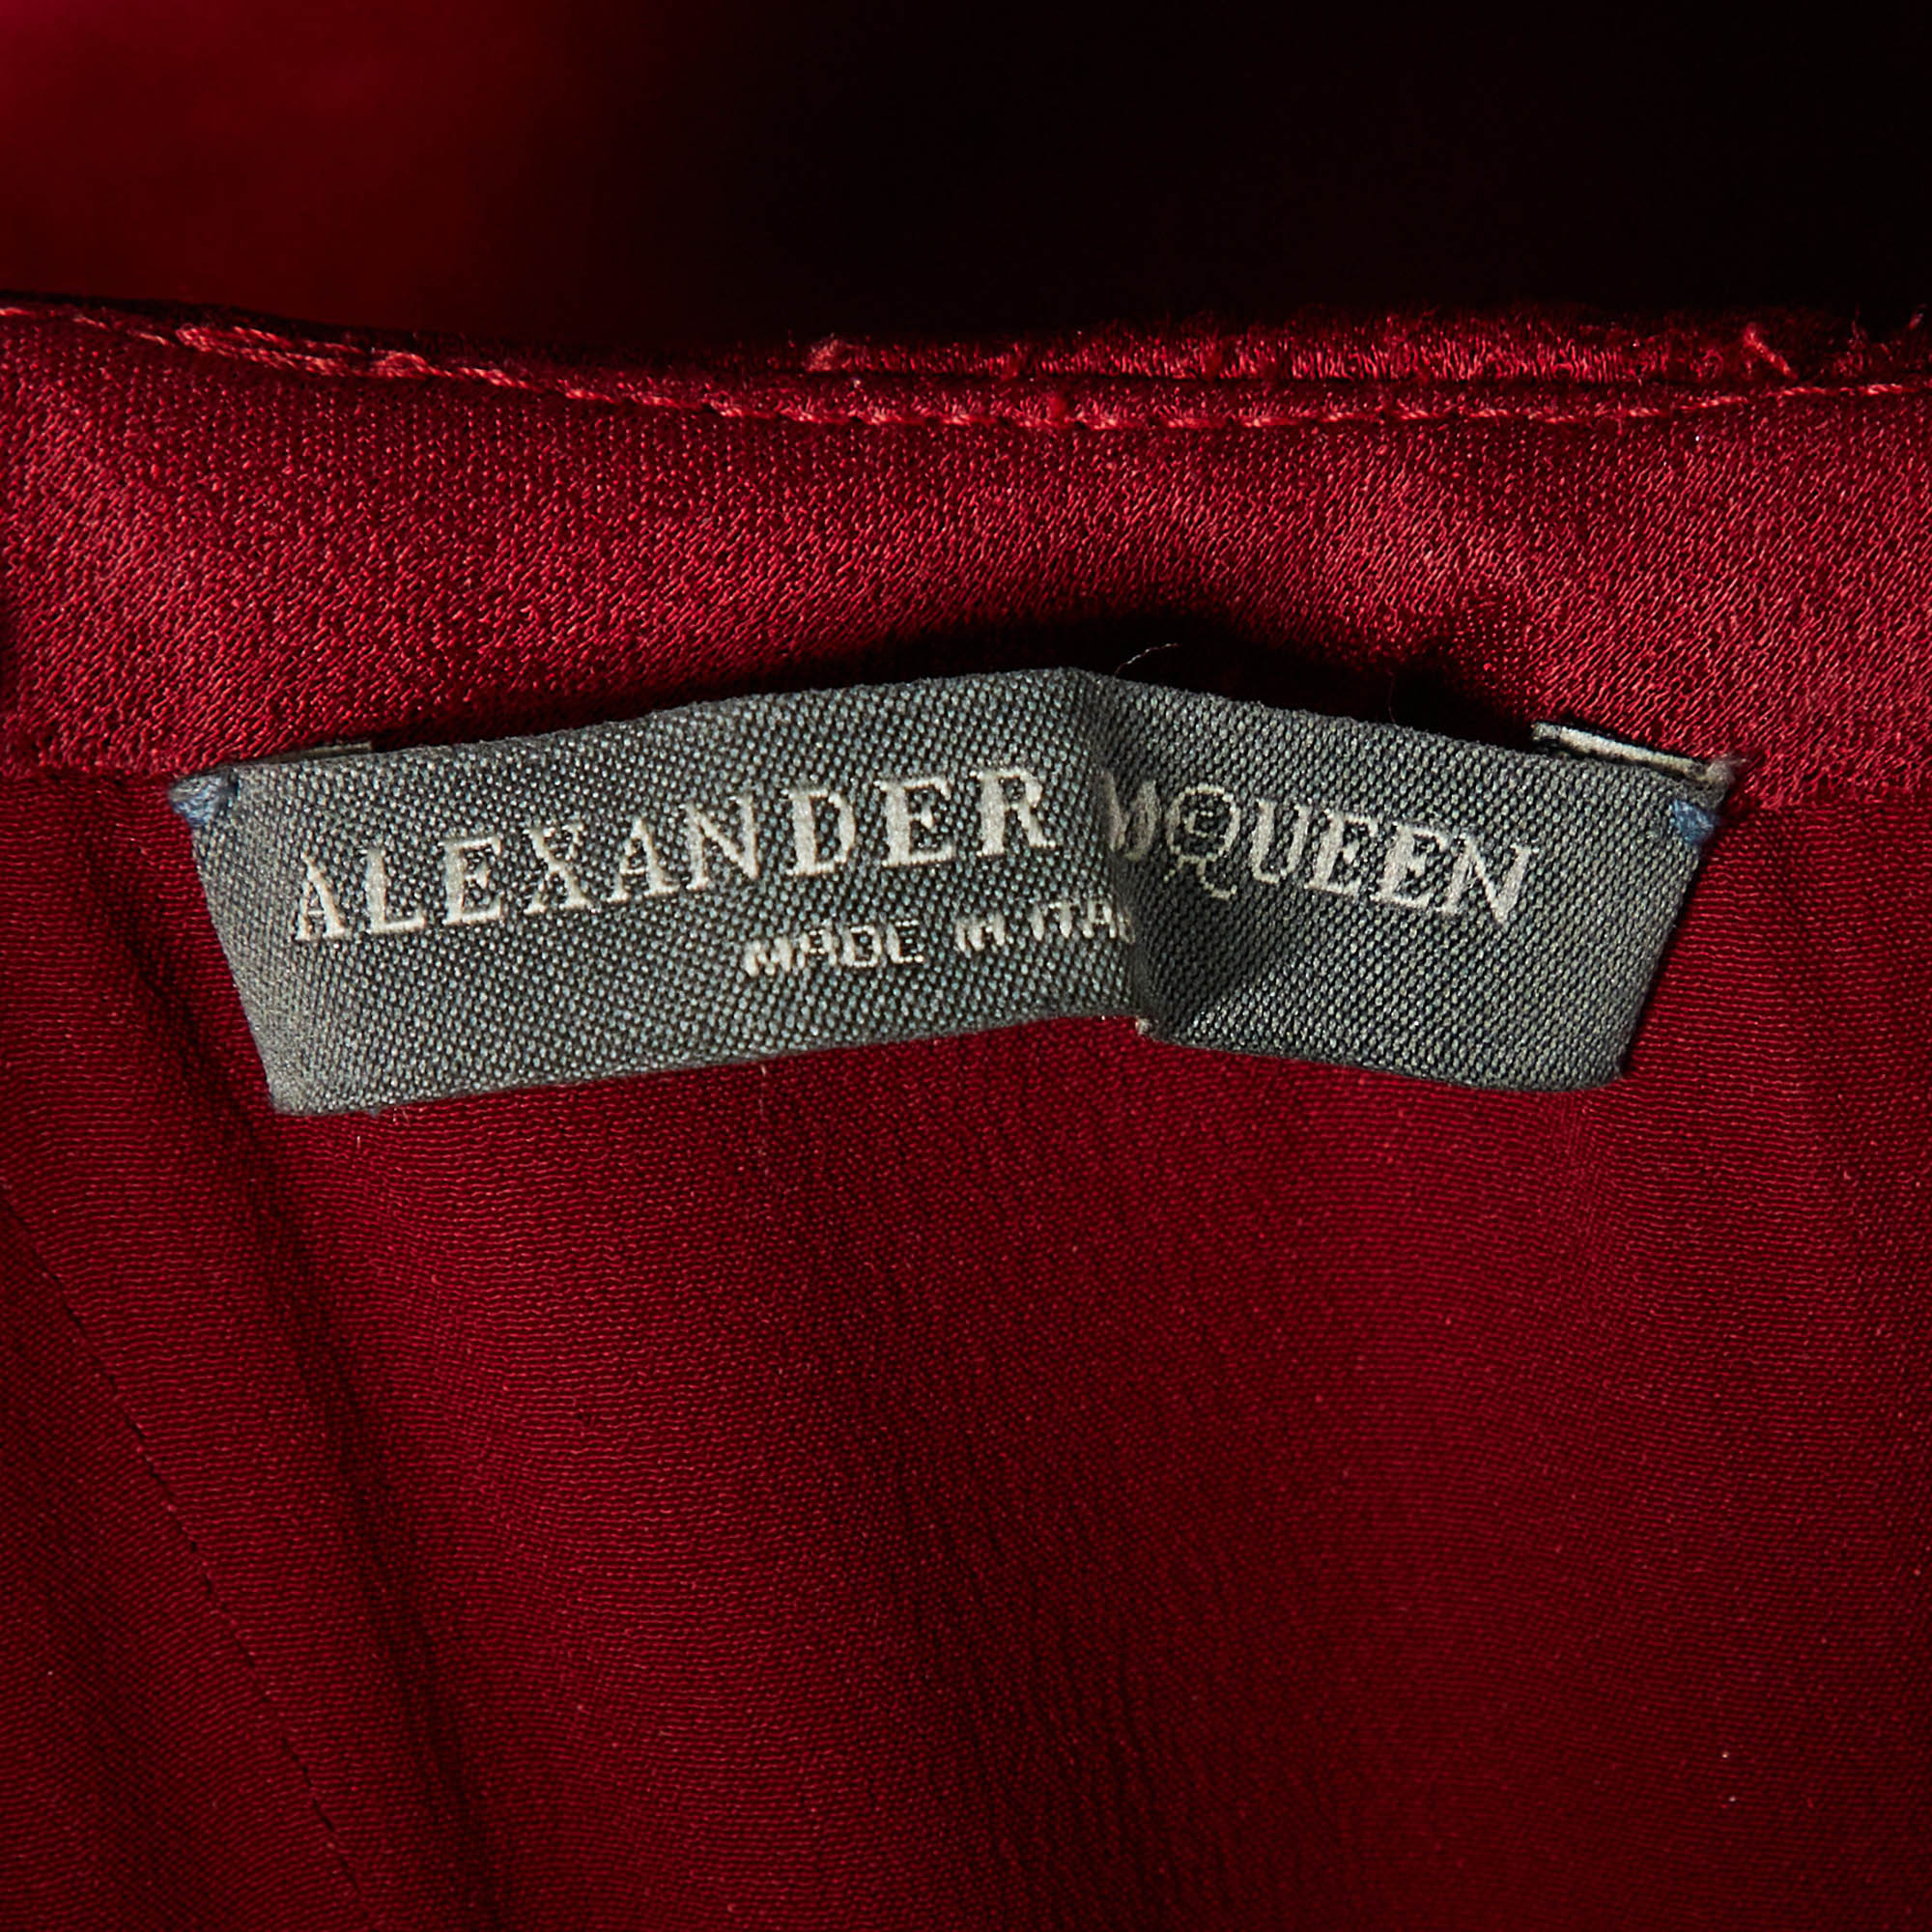 Alexander McQueen Burgundy Crepe Strapless Gown S